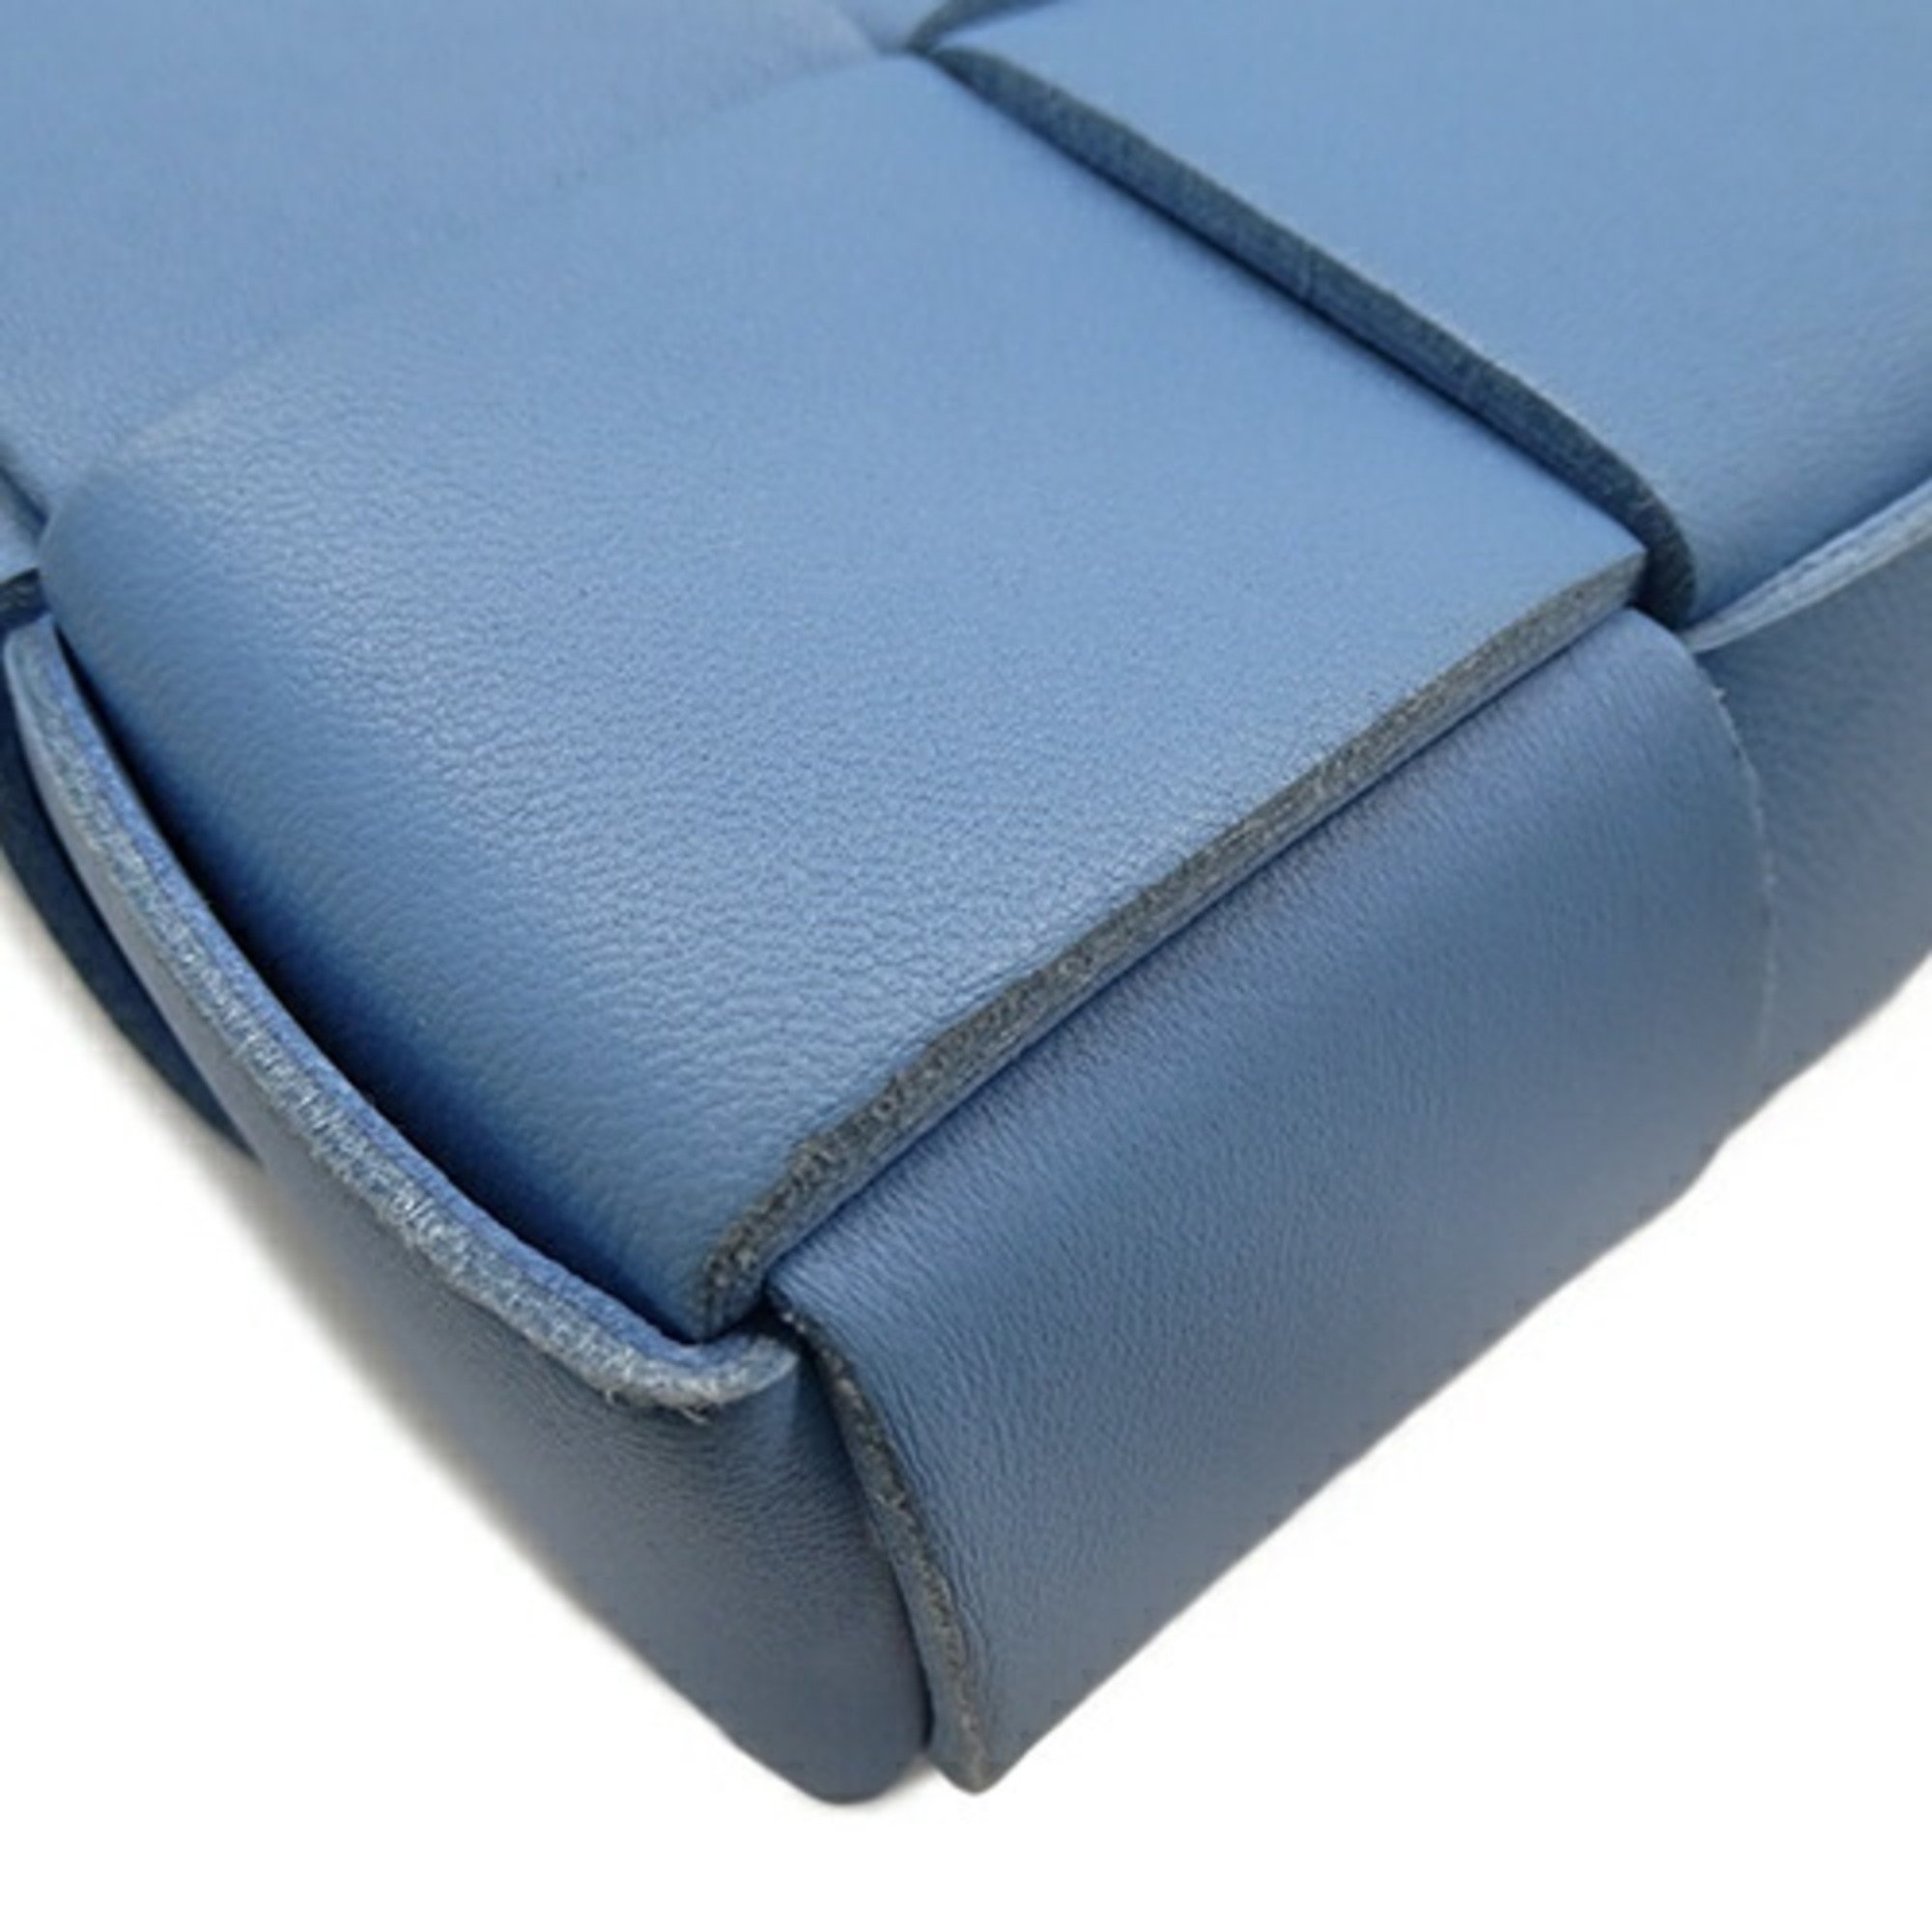 Bottega Veneta BOTTEGAVENETA Bag Women's Handbag Shoulder 2way Leather Intrecciato Cassette Light Blue 747755 Compact